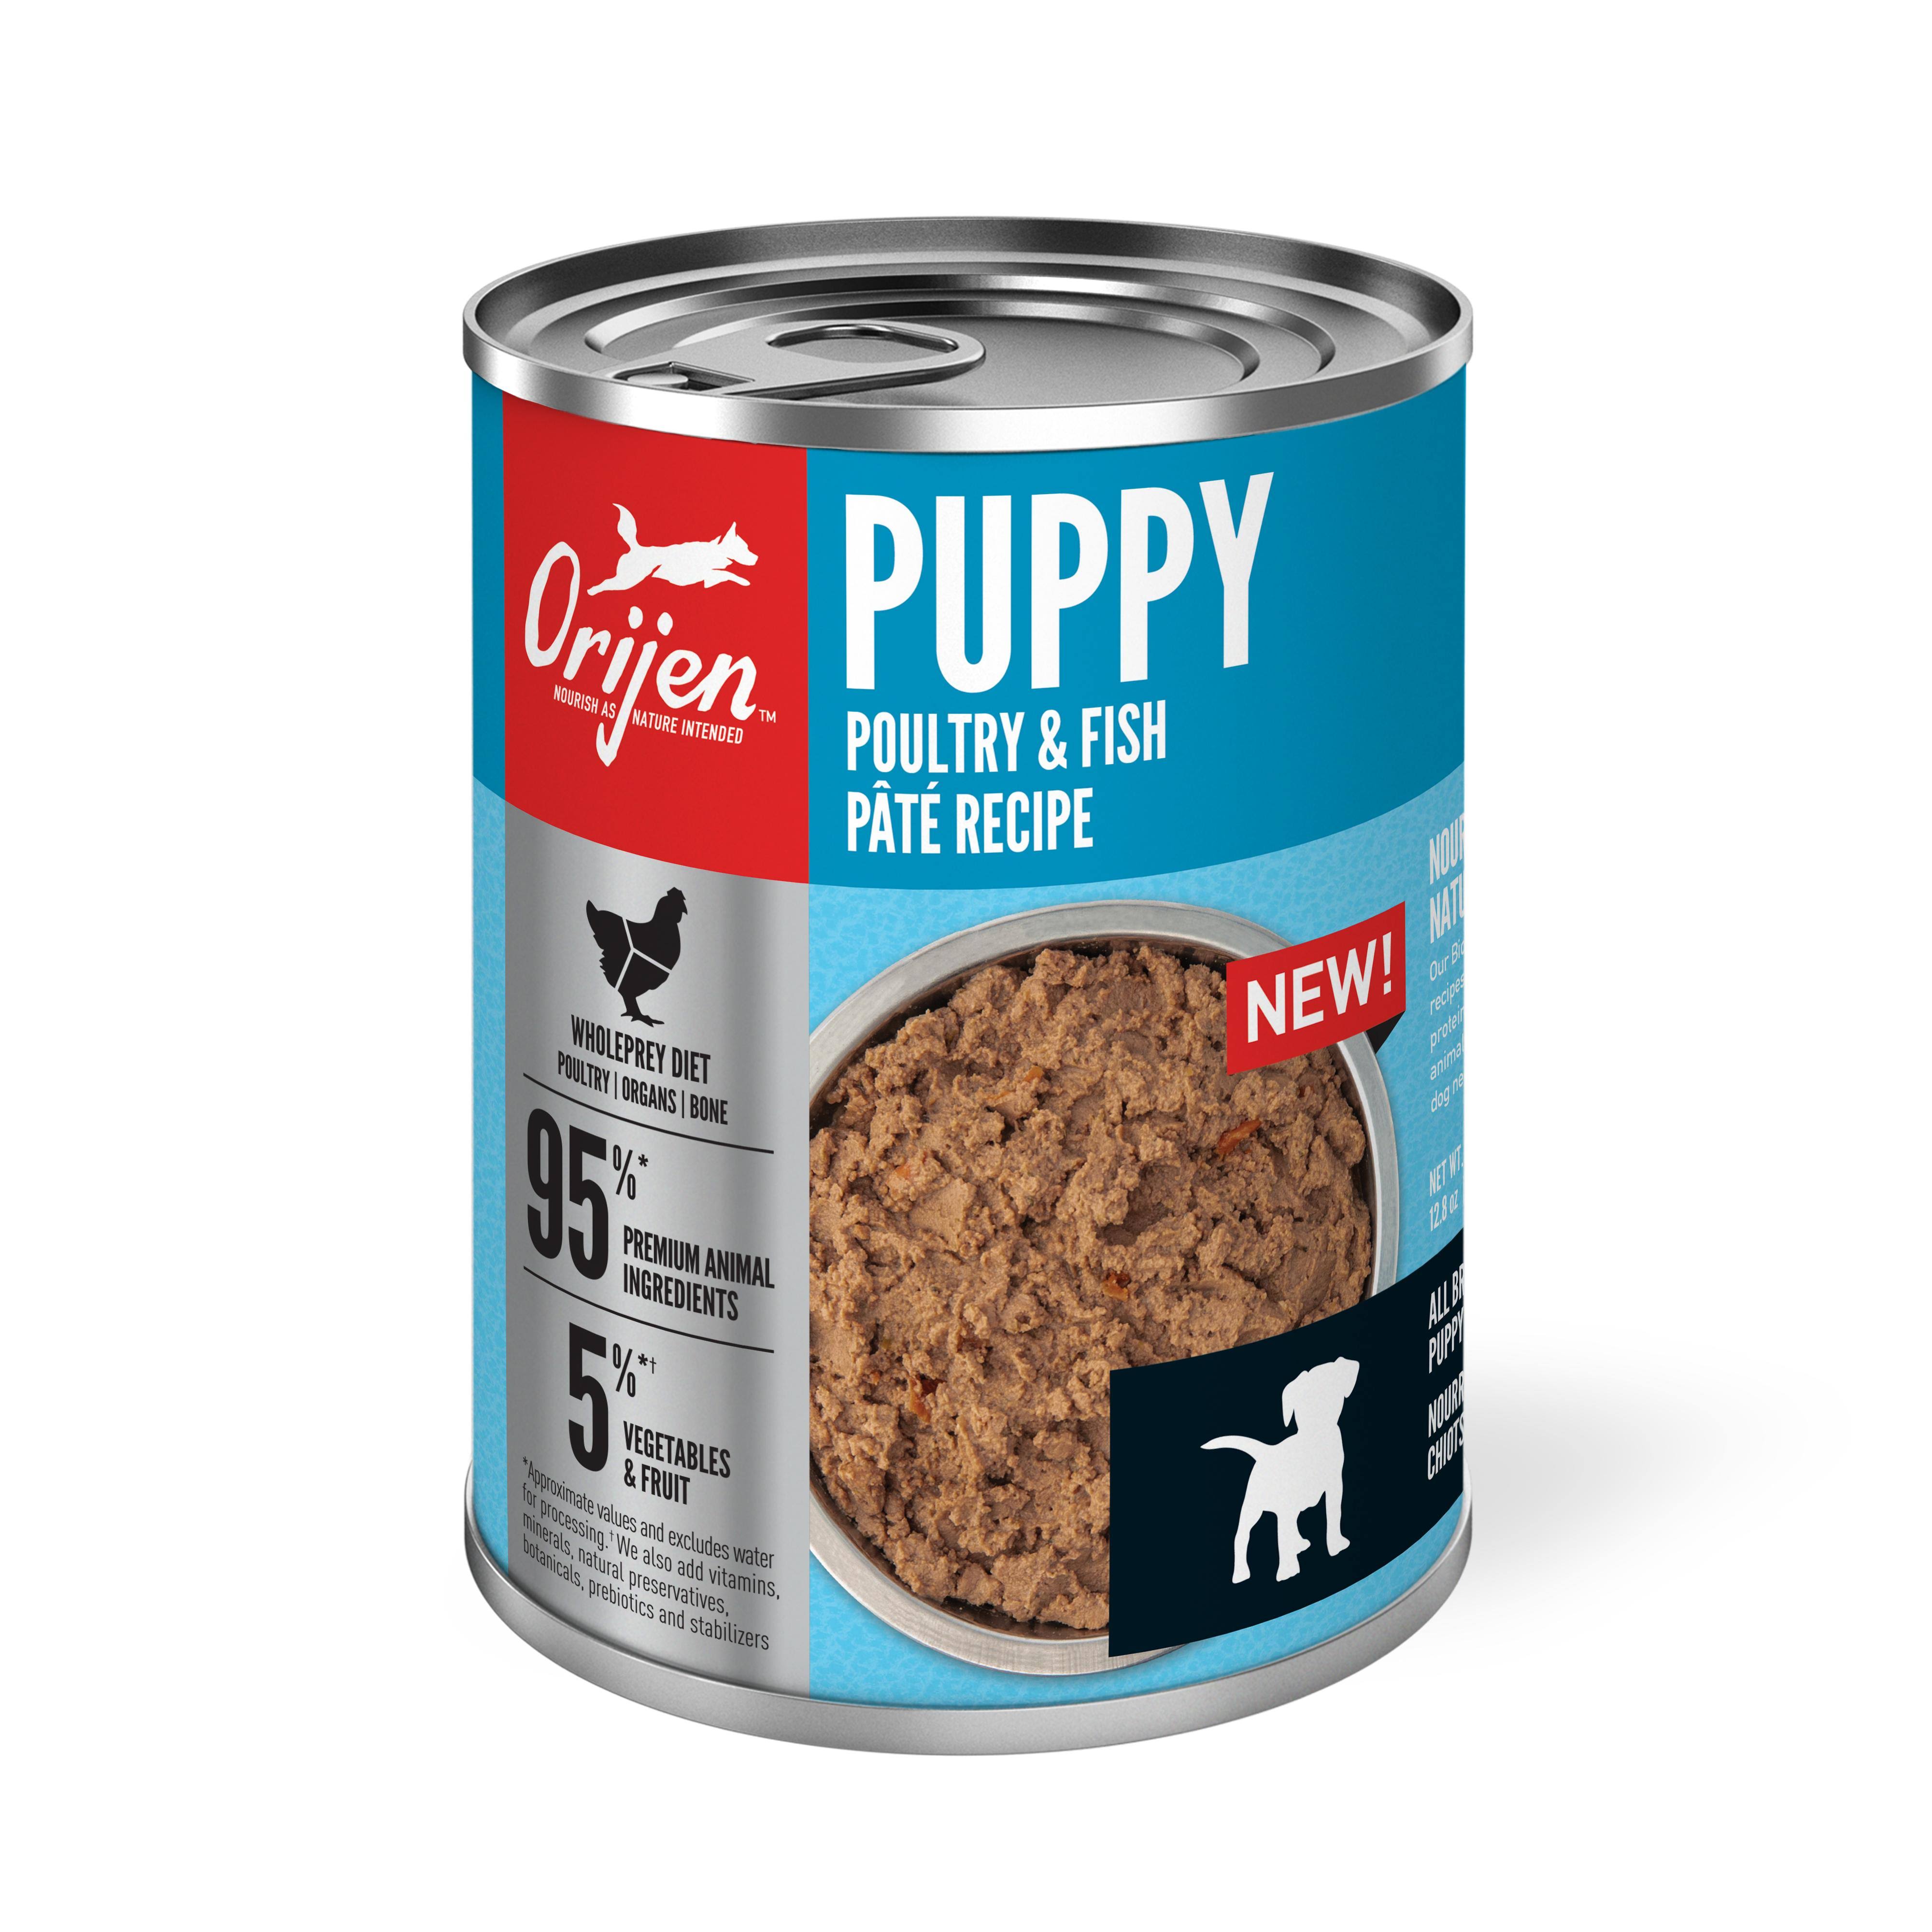 Orijen Puppy Poultry & Fish Pate Dog Food, 12.8-Oz.